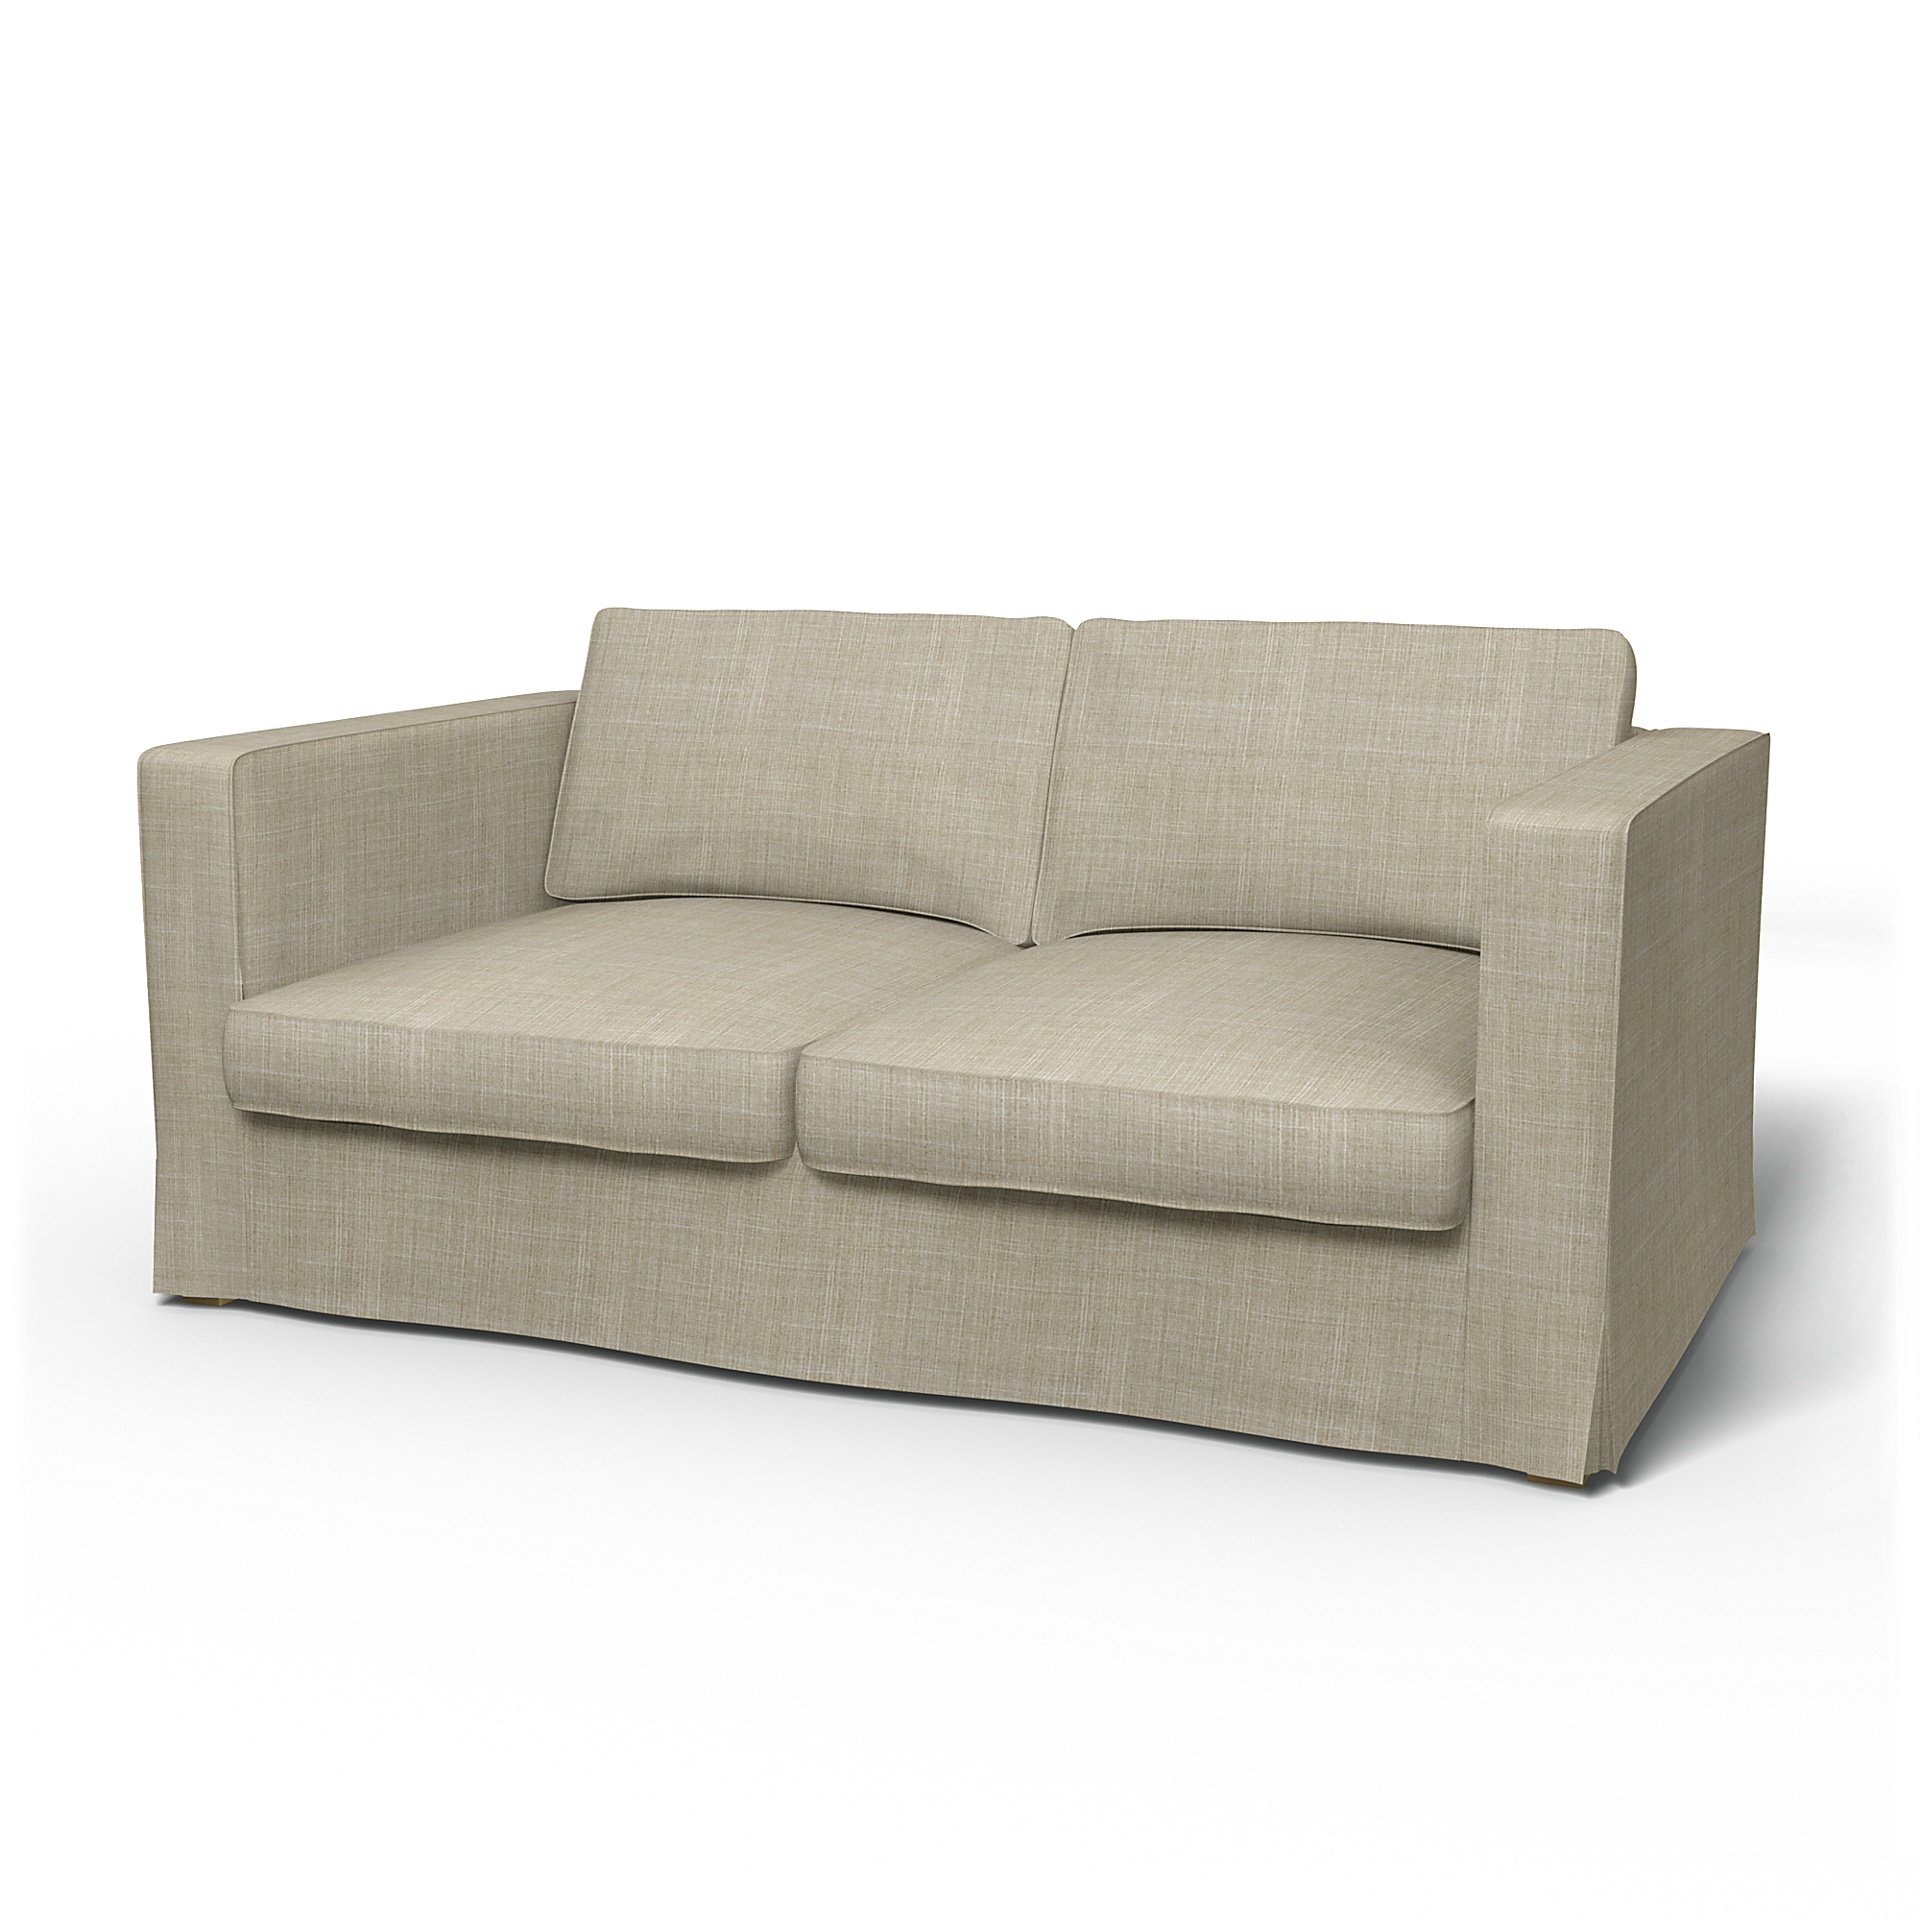 IKEA - Karlstad 2 Seater Sofa Cover, Sand Beige, Boucle & Texture - Bemz